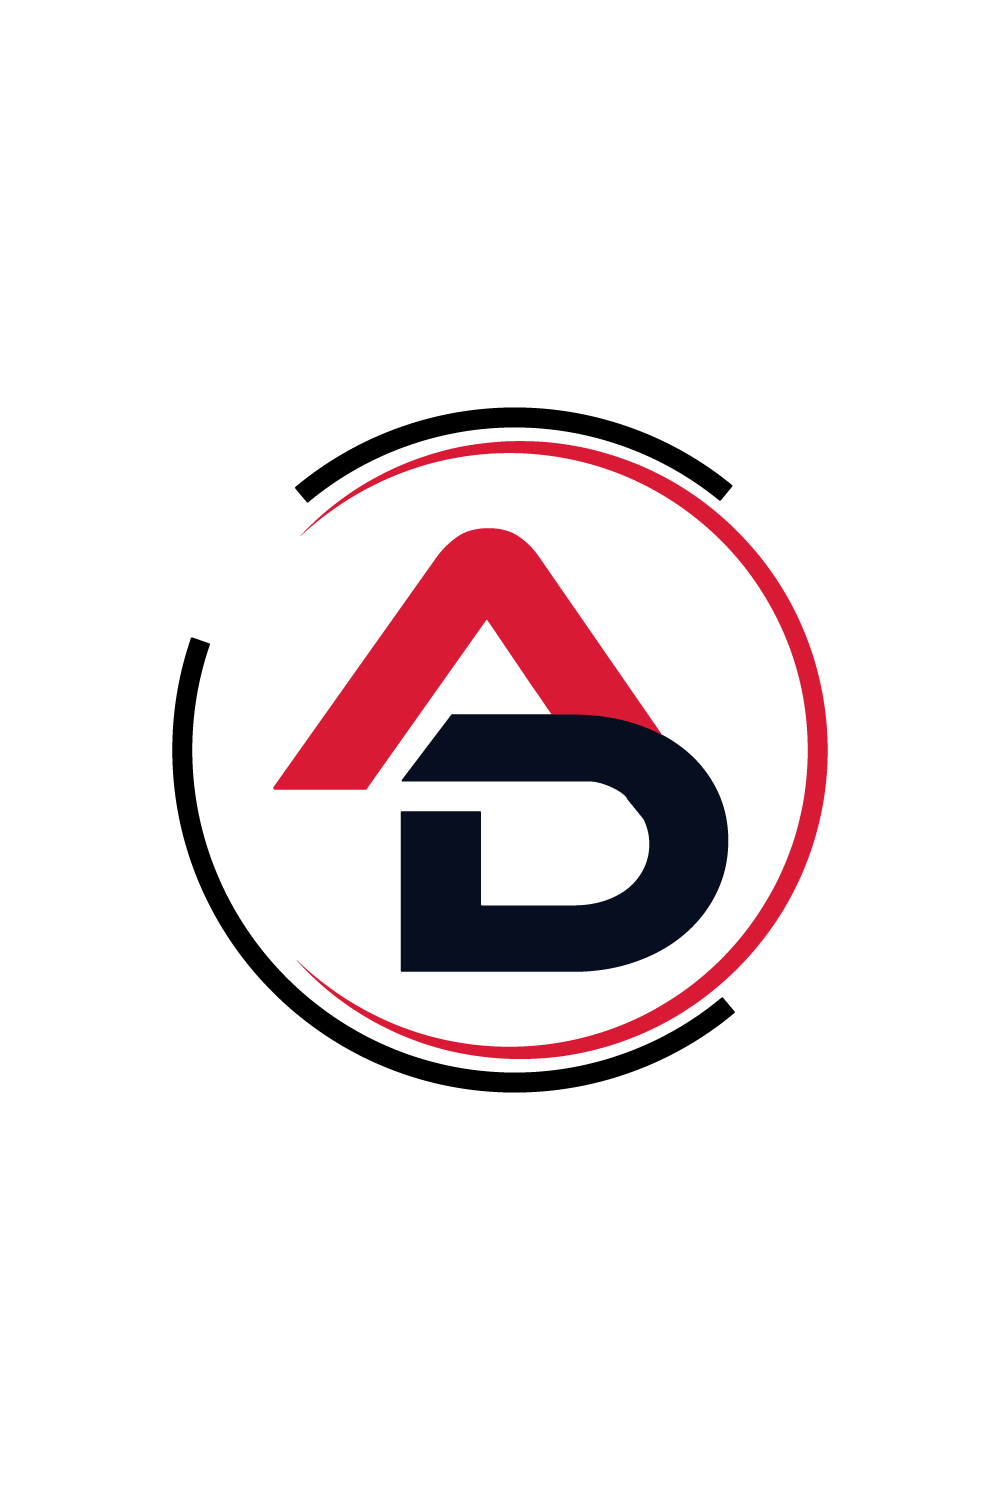 Initials AD letters logo design vector icon AD logo monogram design, DA circle logo pinterest preview image.